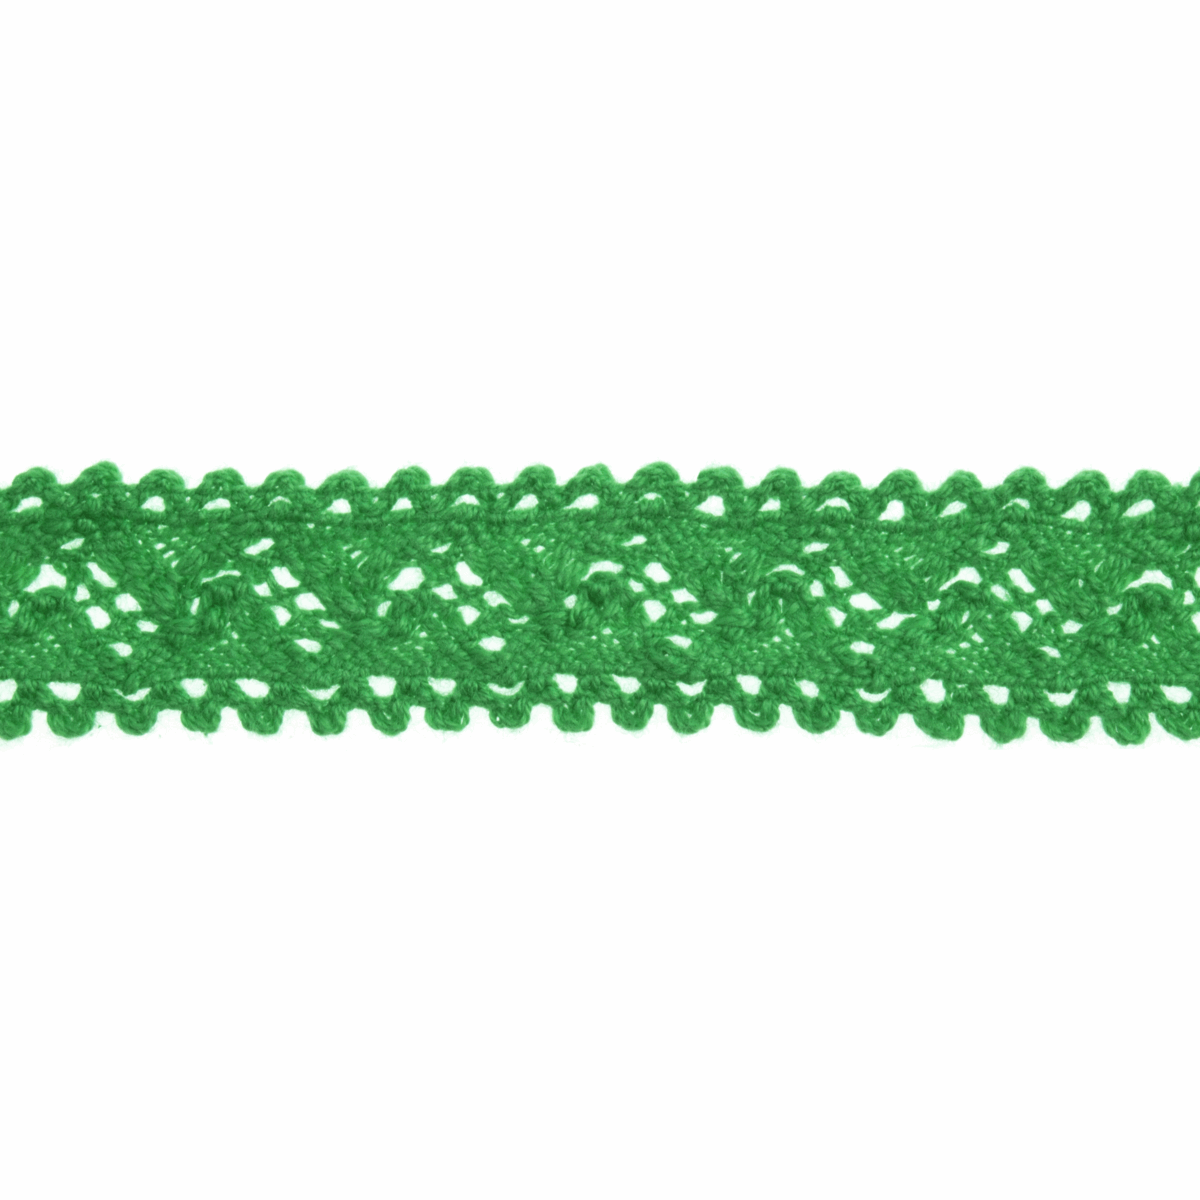 Bowtique Green Cotton Lace Trimming - 4m x 18mm